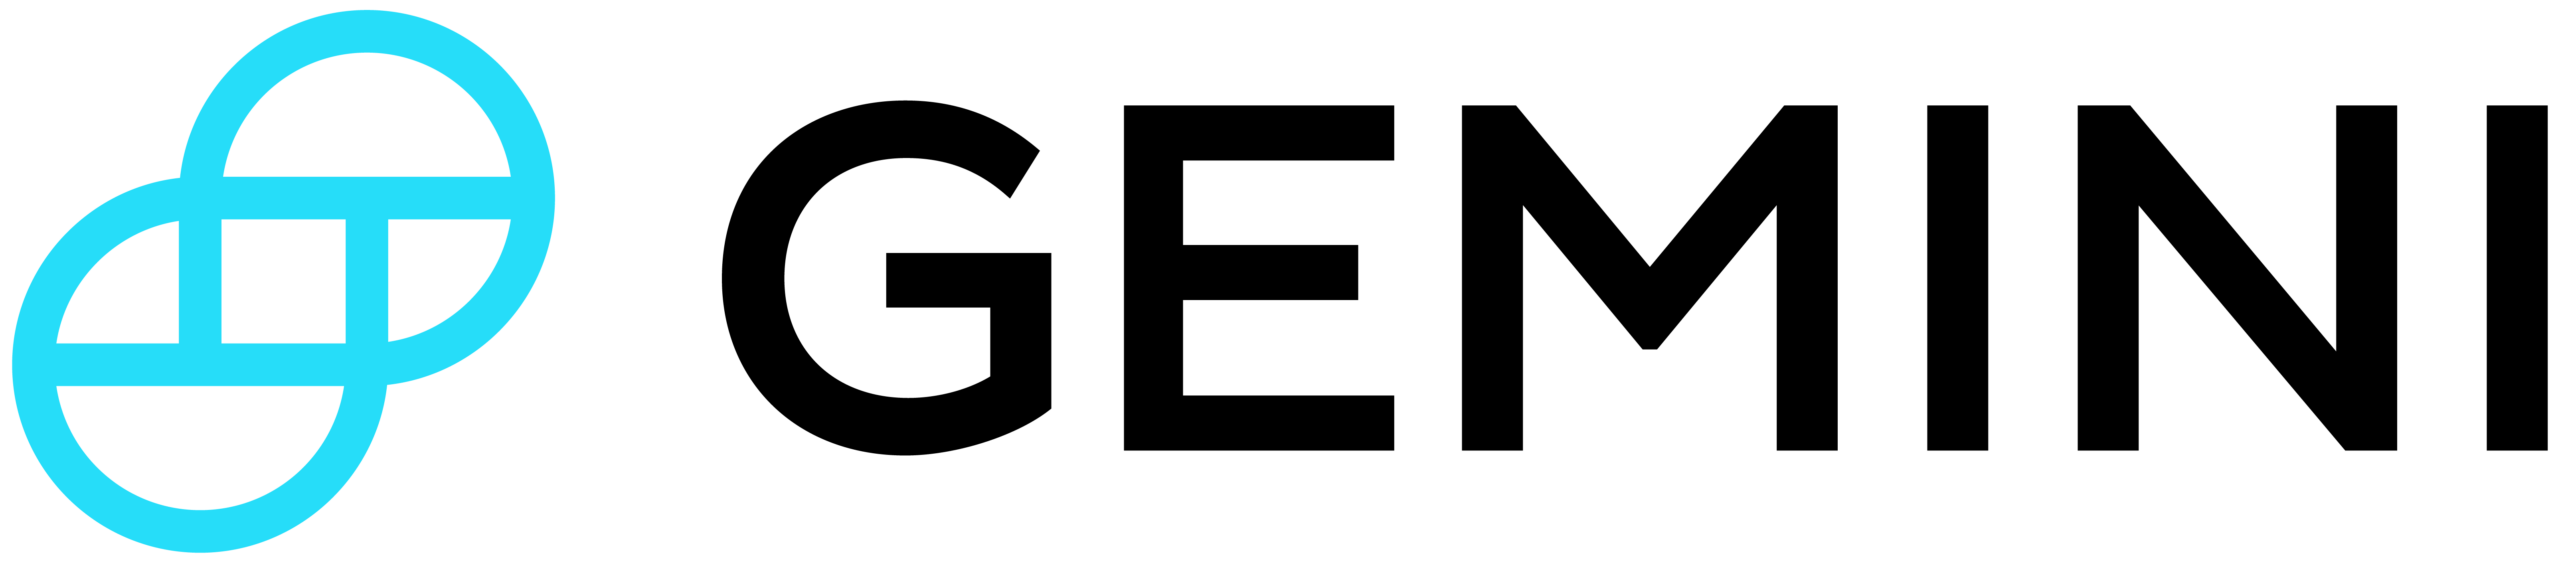 Logotipo da carteira Gemini